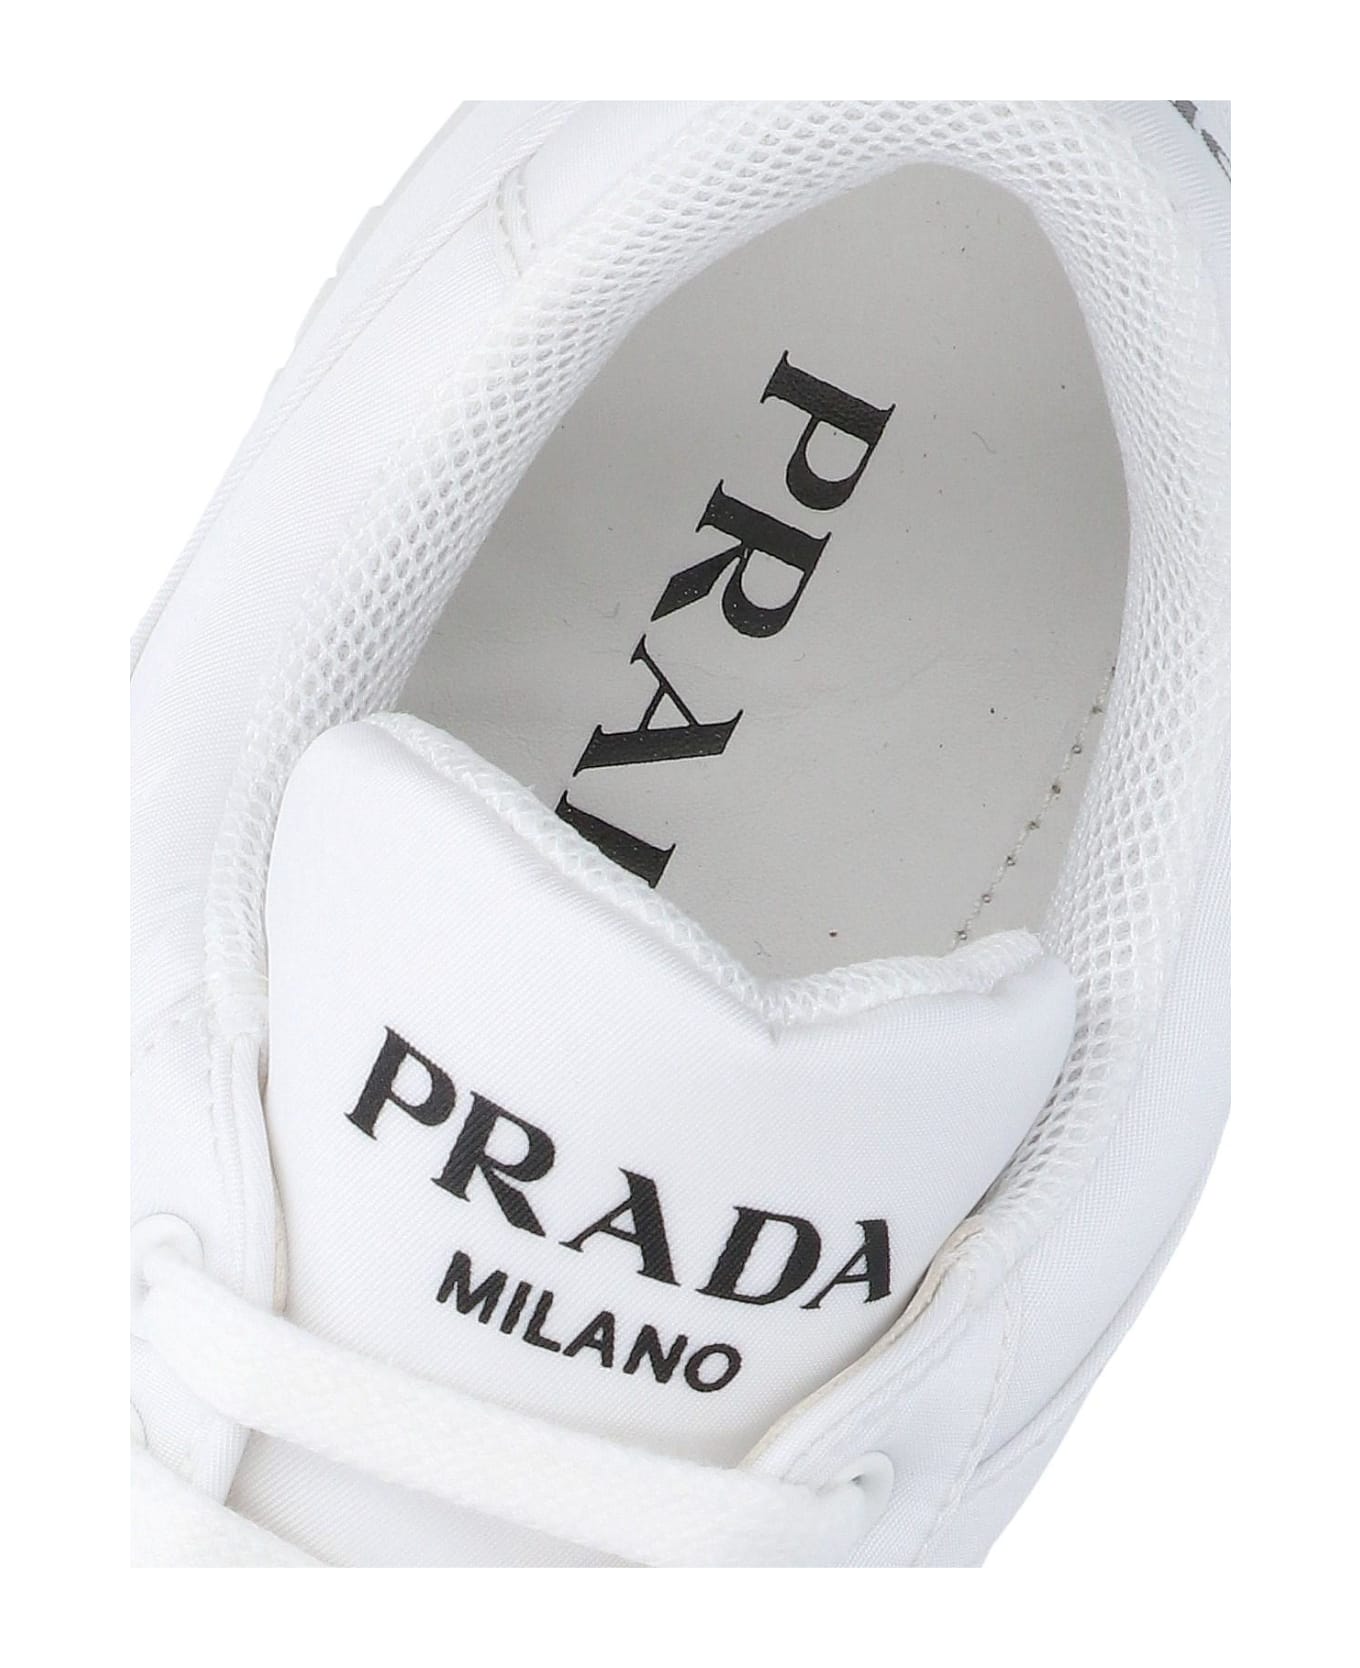 Prada 'downtown' Sneakers - White スニーカー